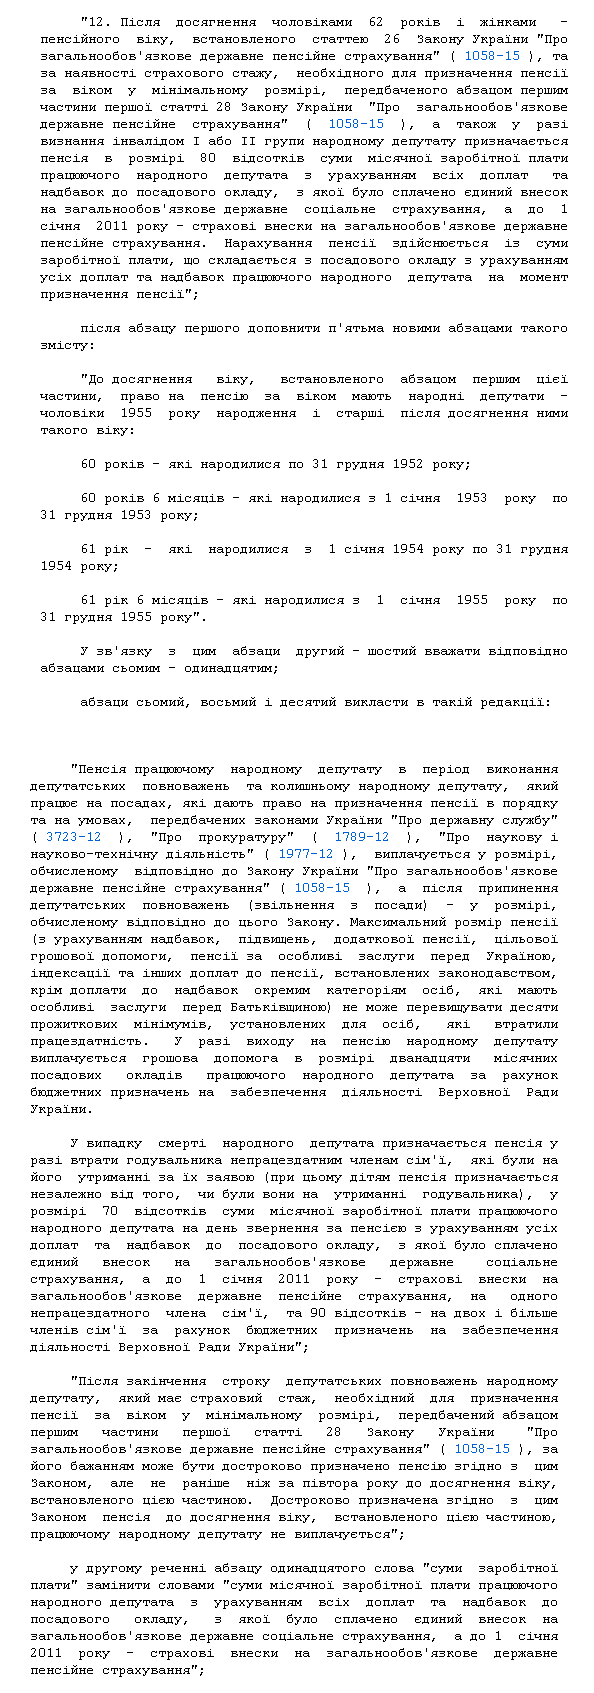 http://zakon1.rada.gov.ua/cgi-bin/laws/main.cgi?page=1&nreg=3668-17